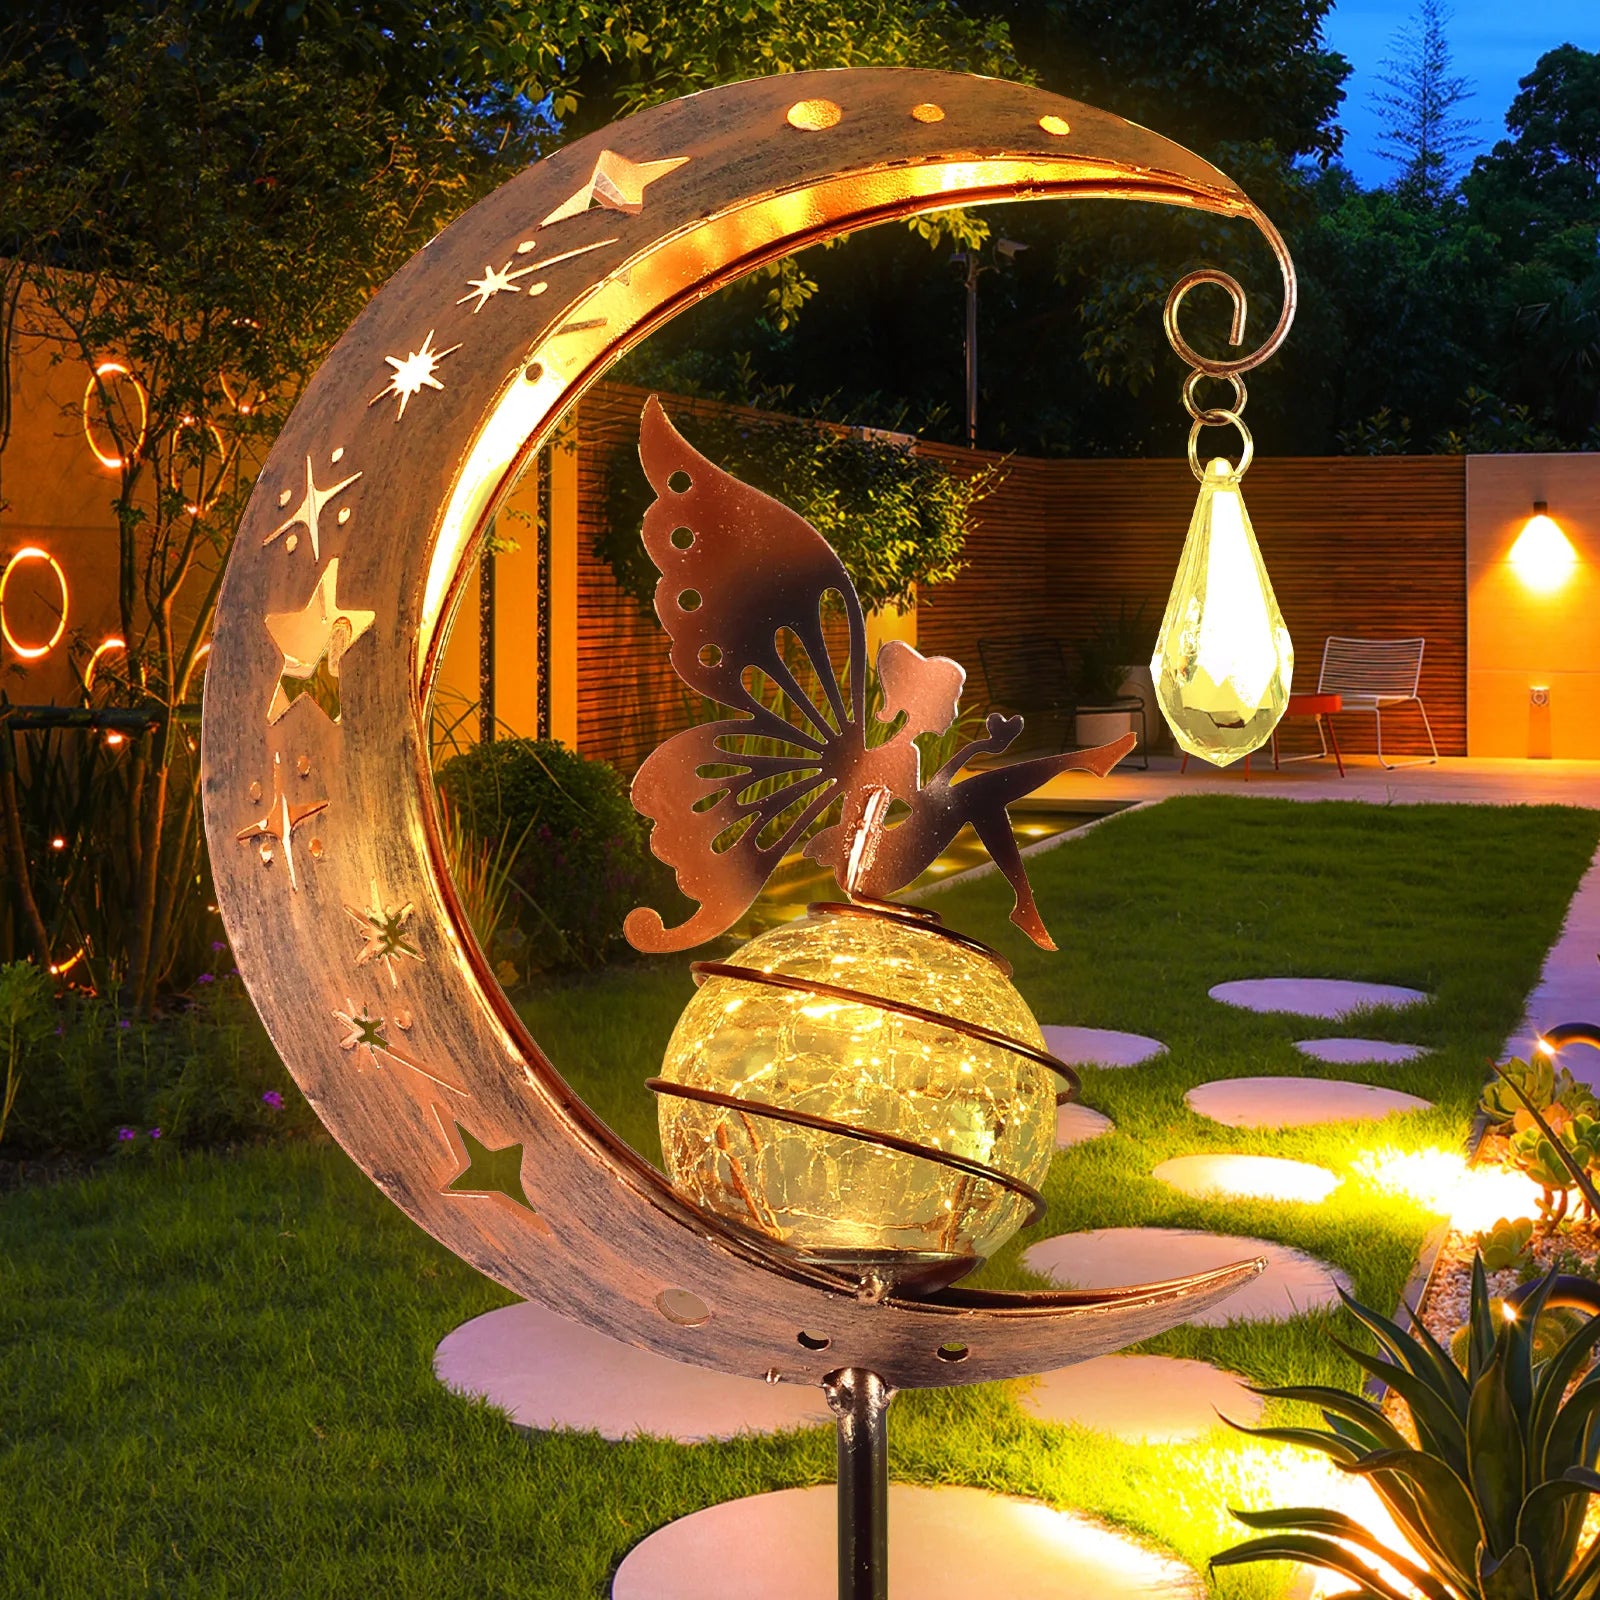 Fairy Moon Solar Lawn Lawn Ornamento ao ar livre Creative decorativo de ferro oco de crack hollo